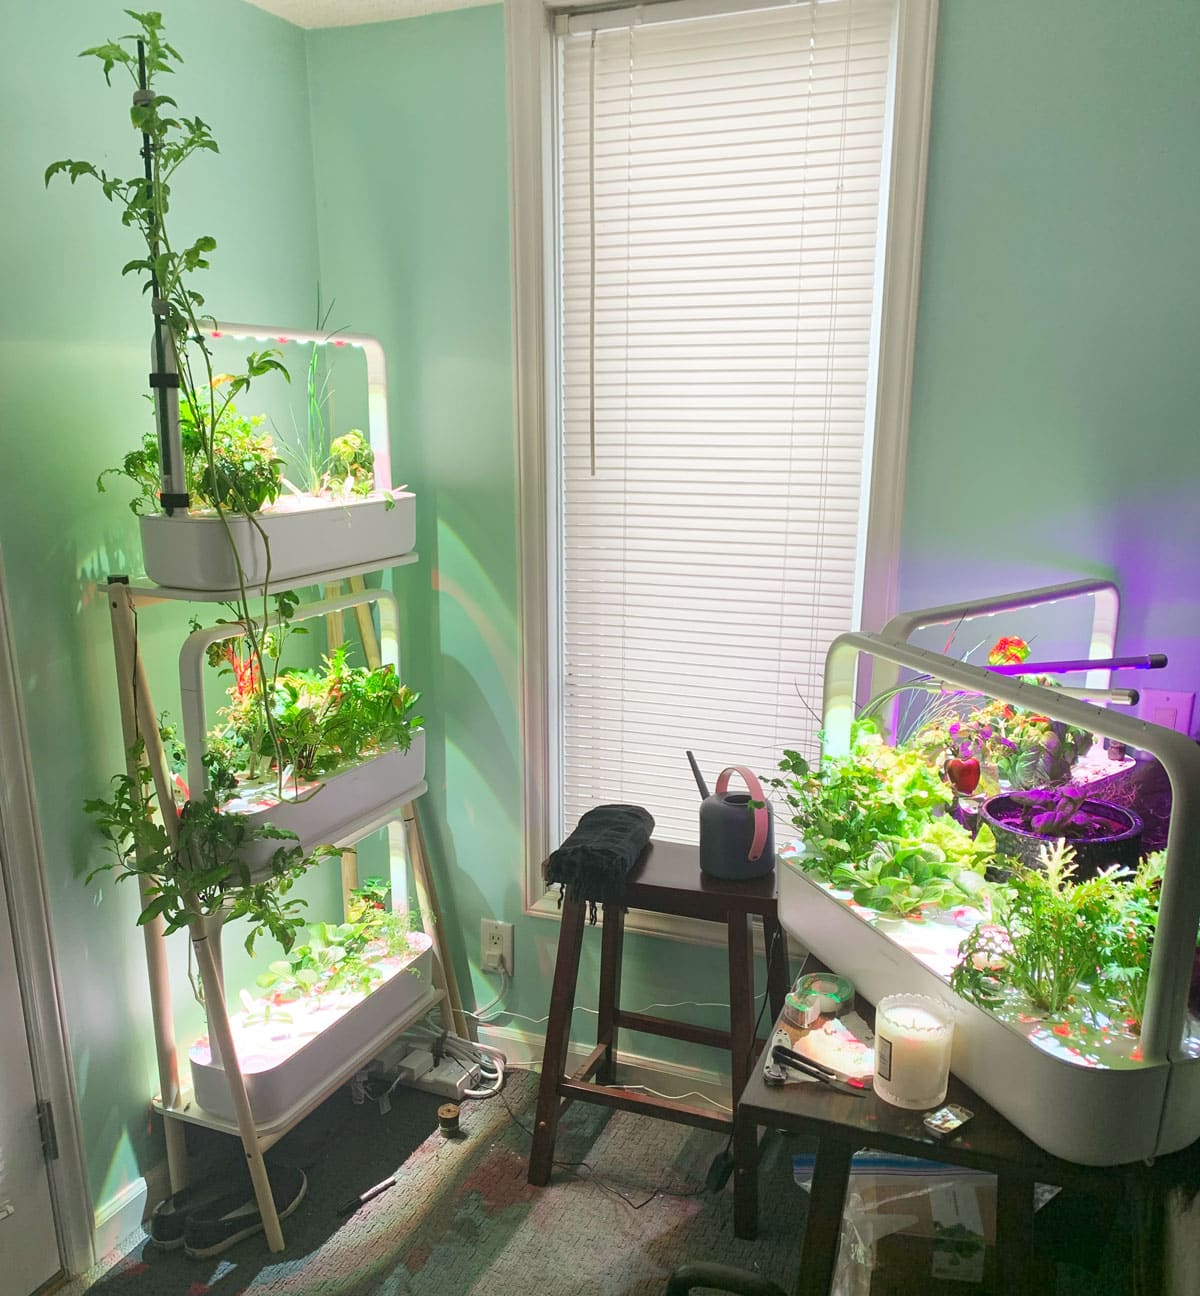 The Home Office Indoor Garden Corner with 5 Click and Grow Smart Gardens